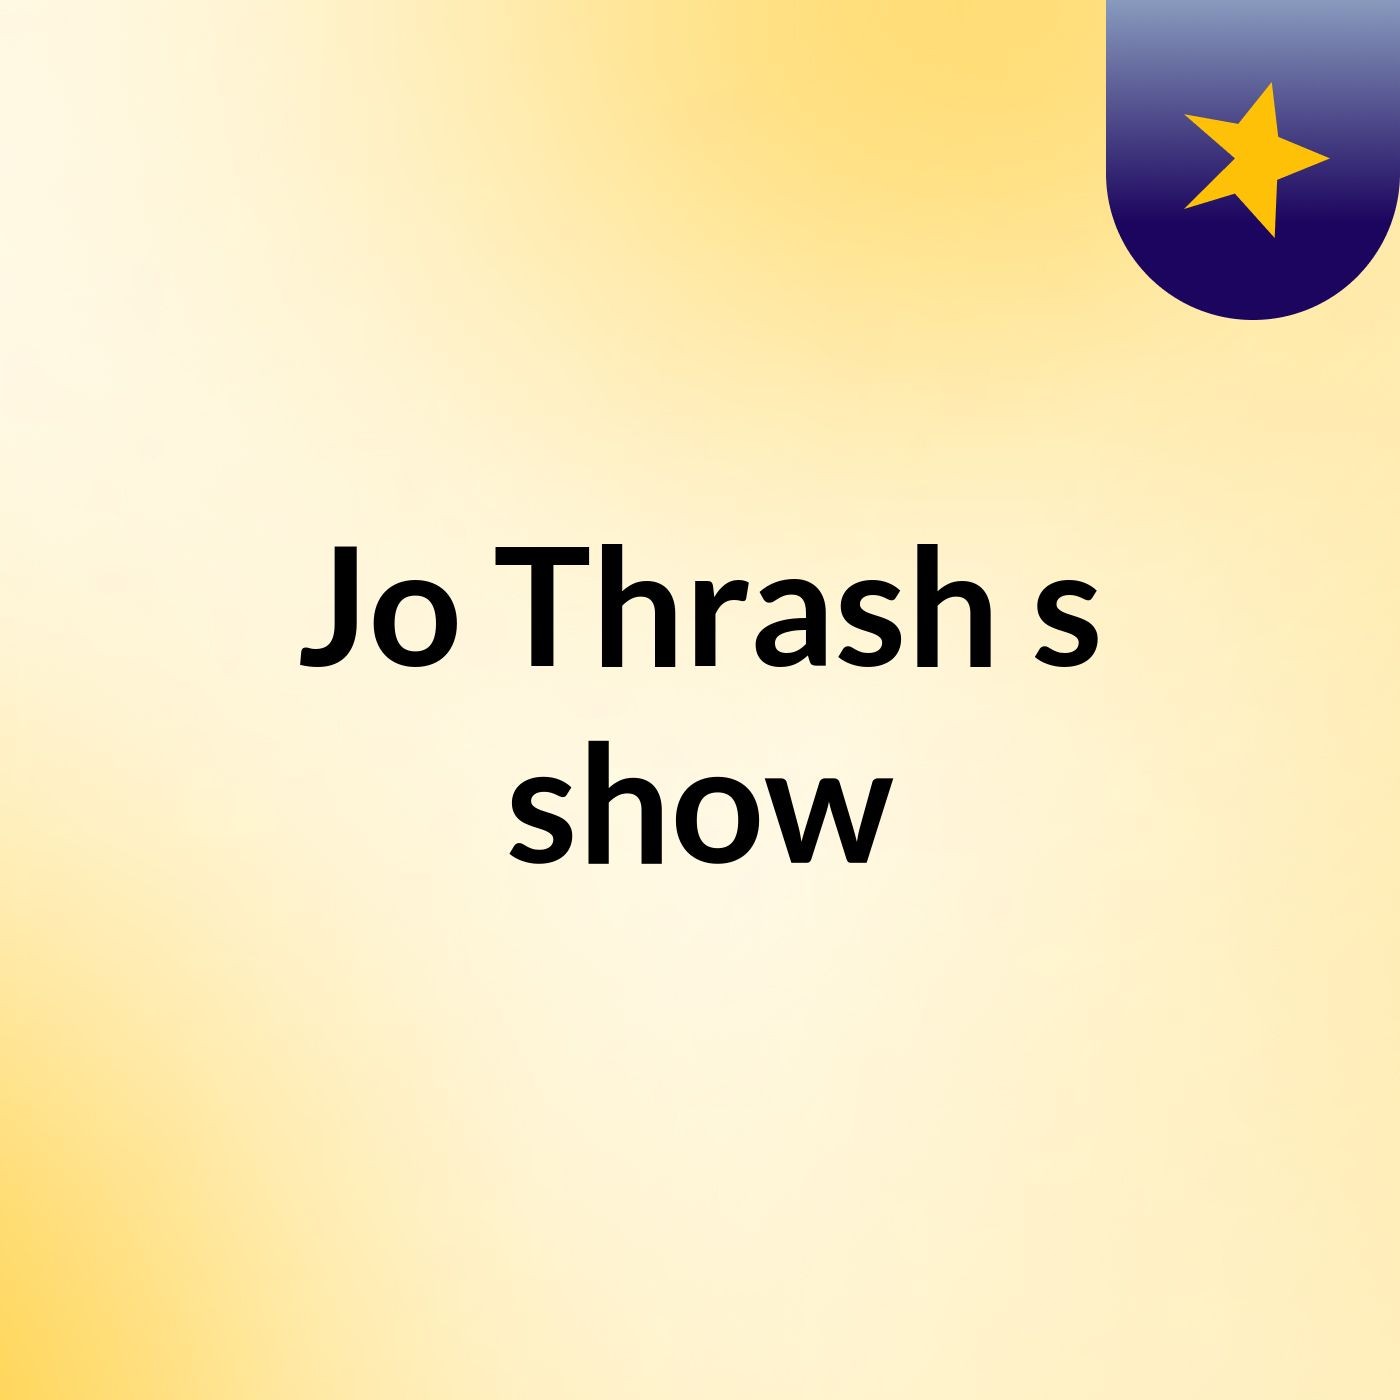 Jo Thrash's show